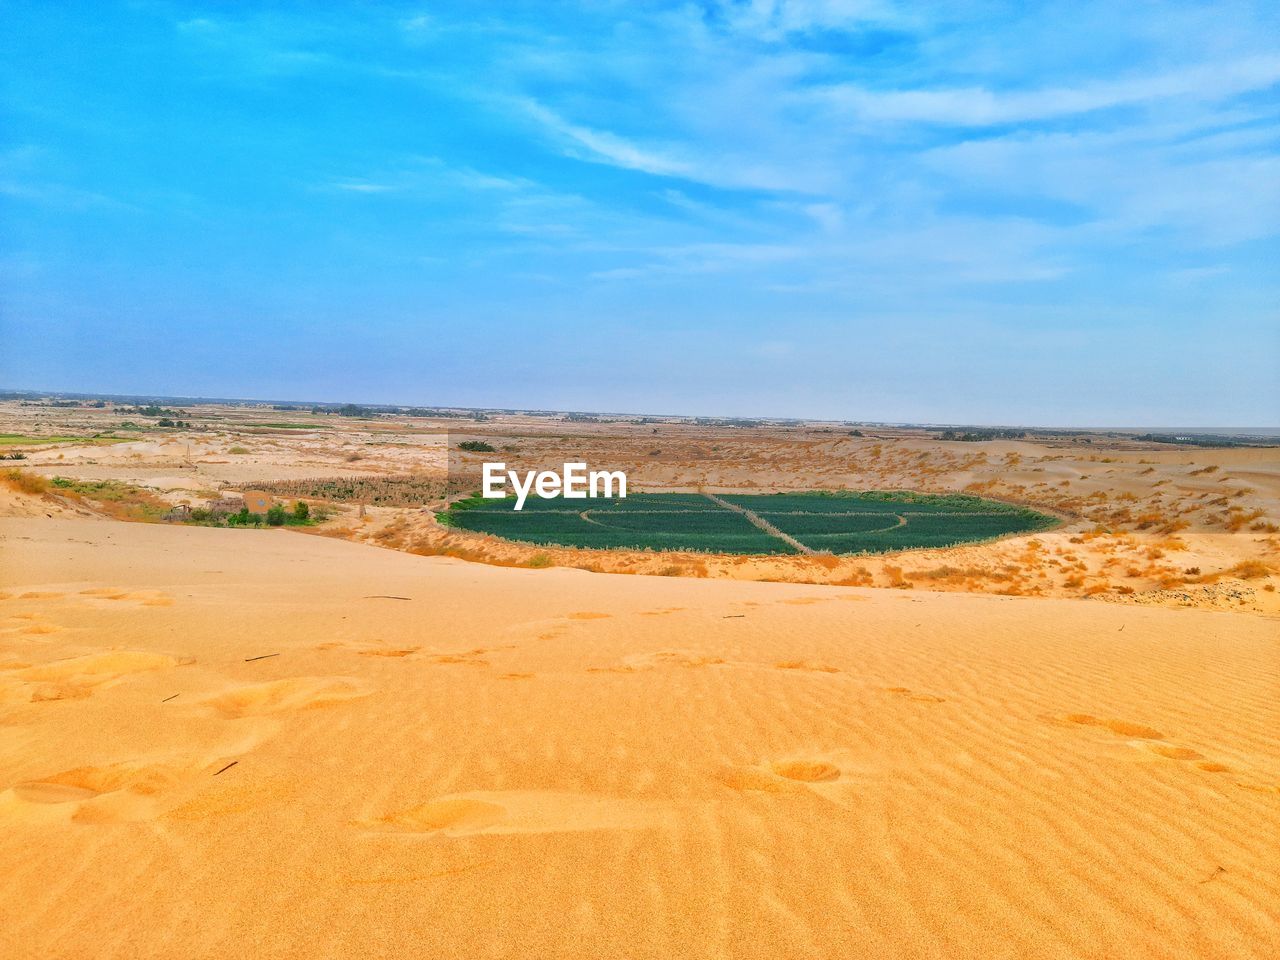 Agriculture in sahara desert